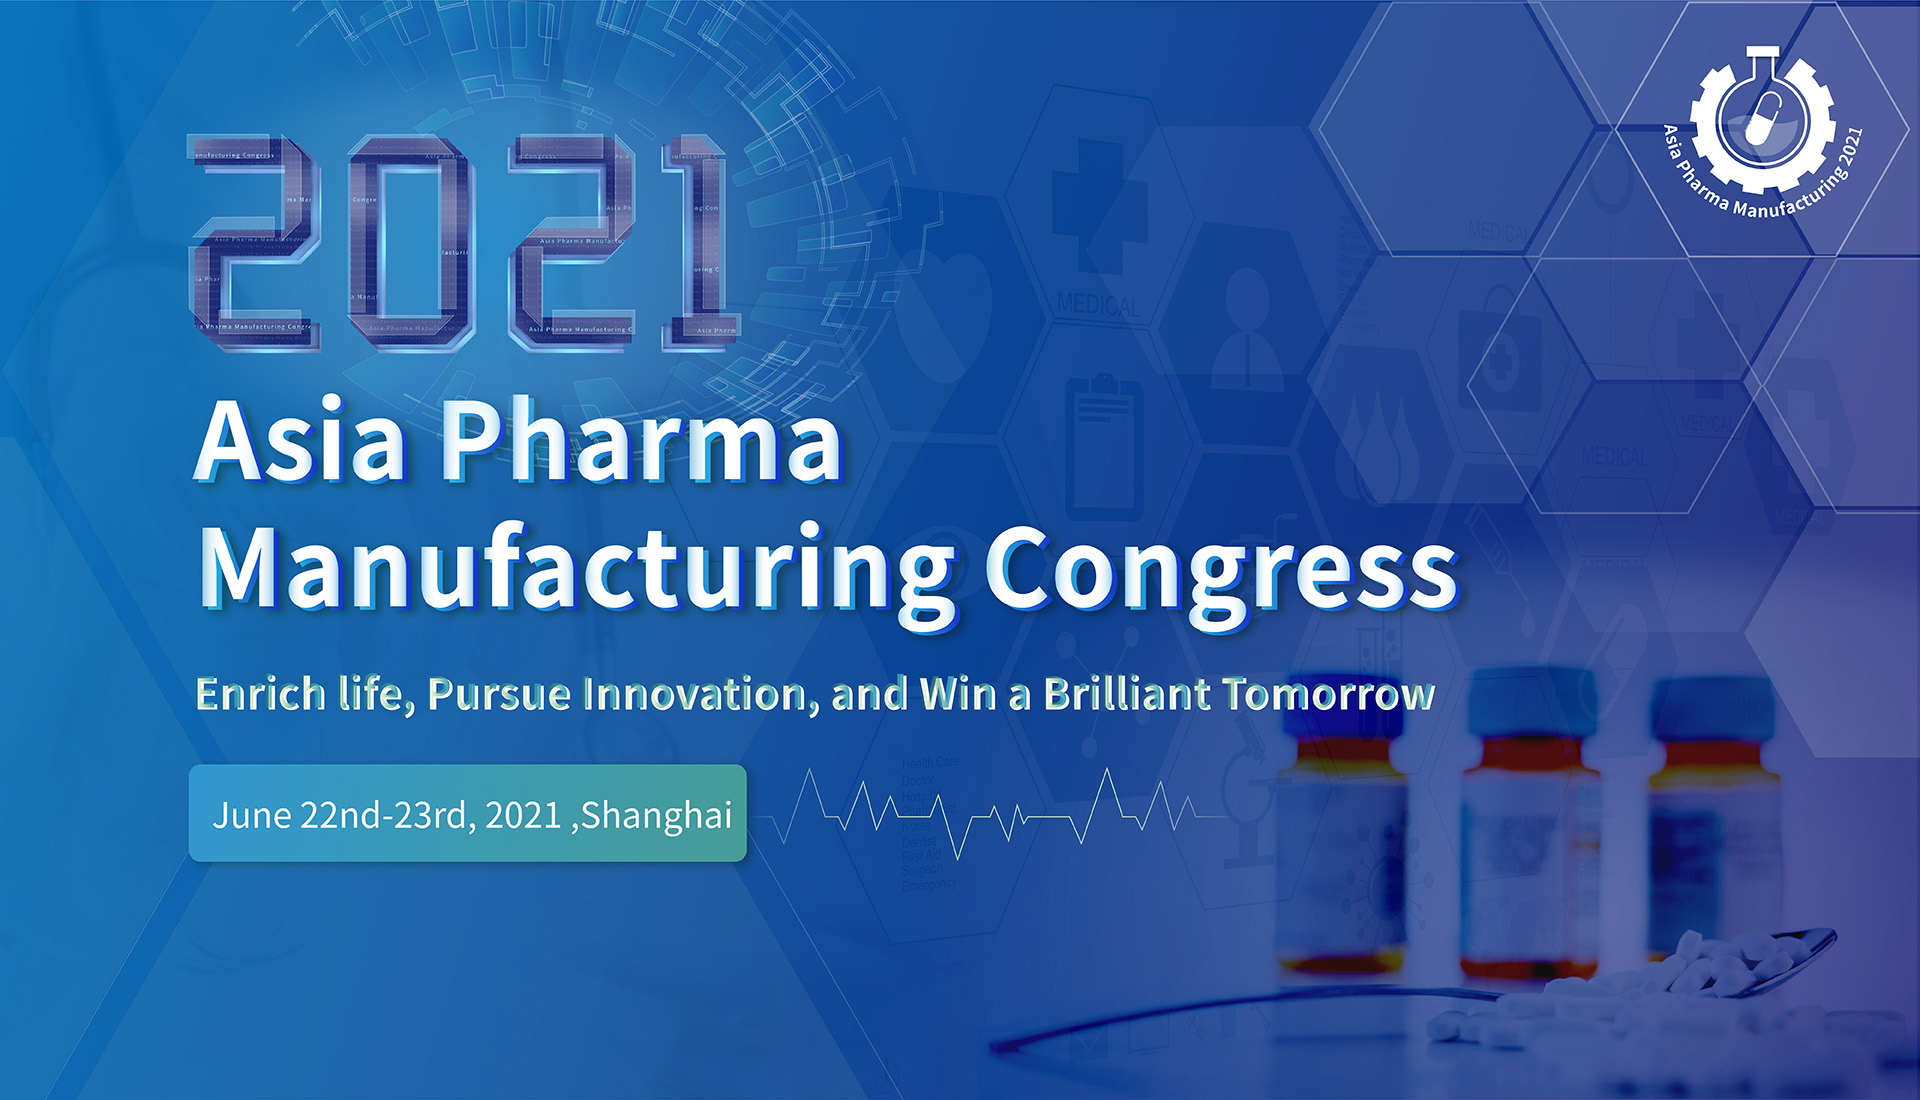 Asia Pharma Manufacturing Congress 2021